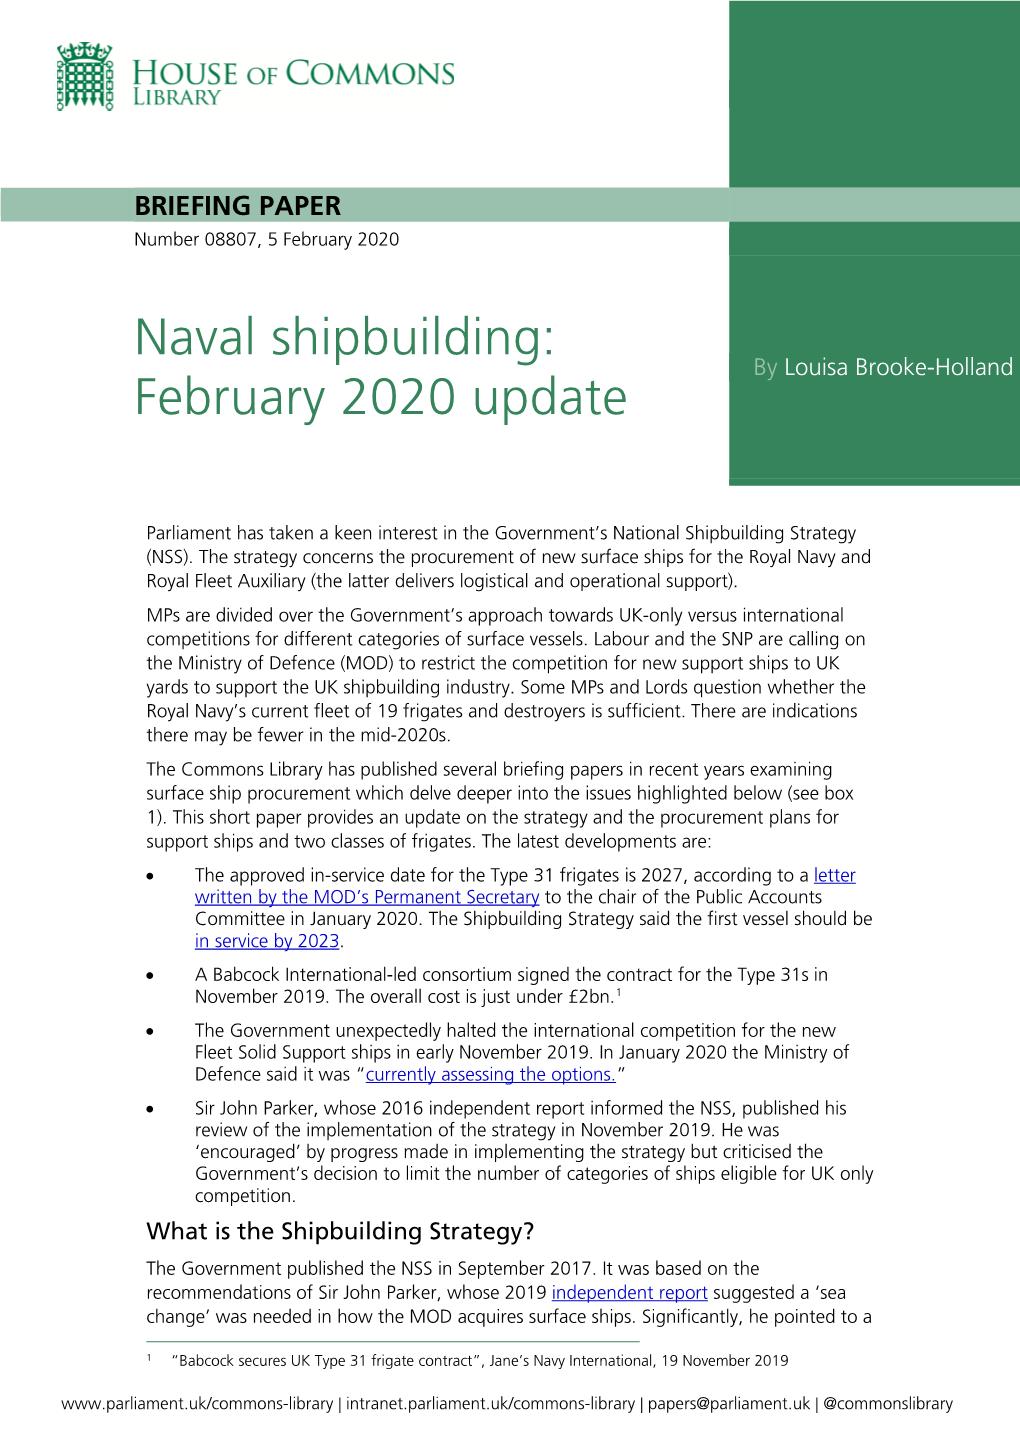 Naval Shipbuilding: February 2020 Update